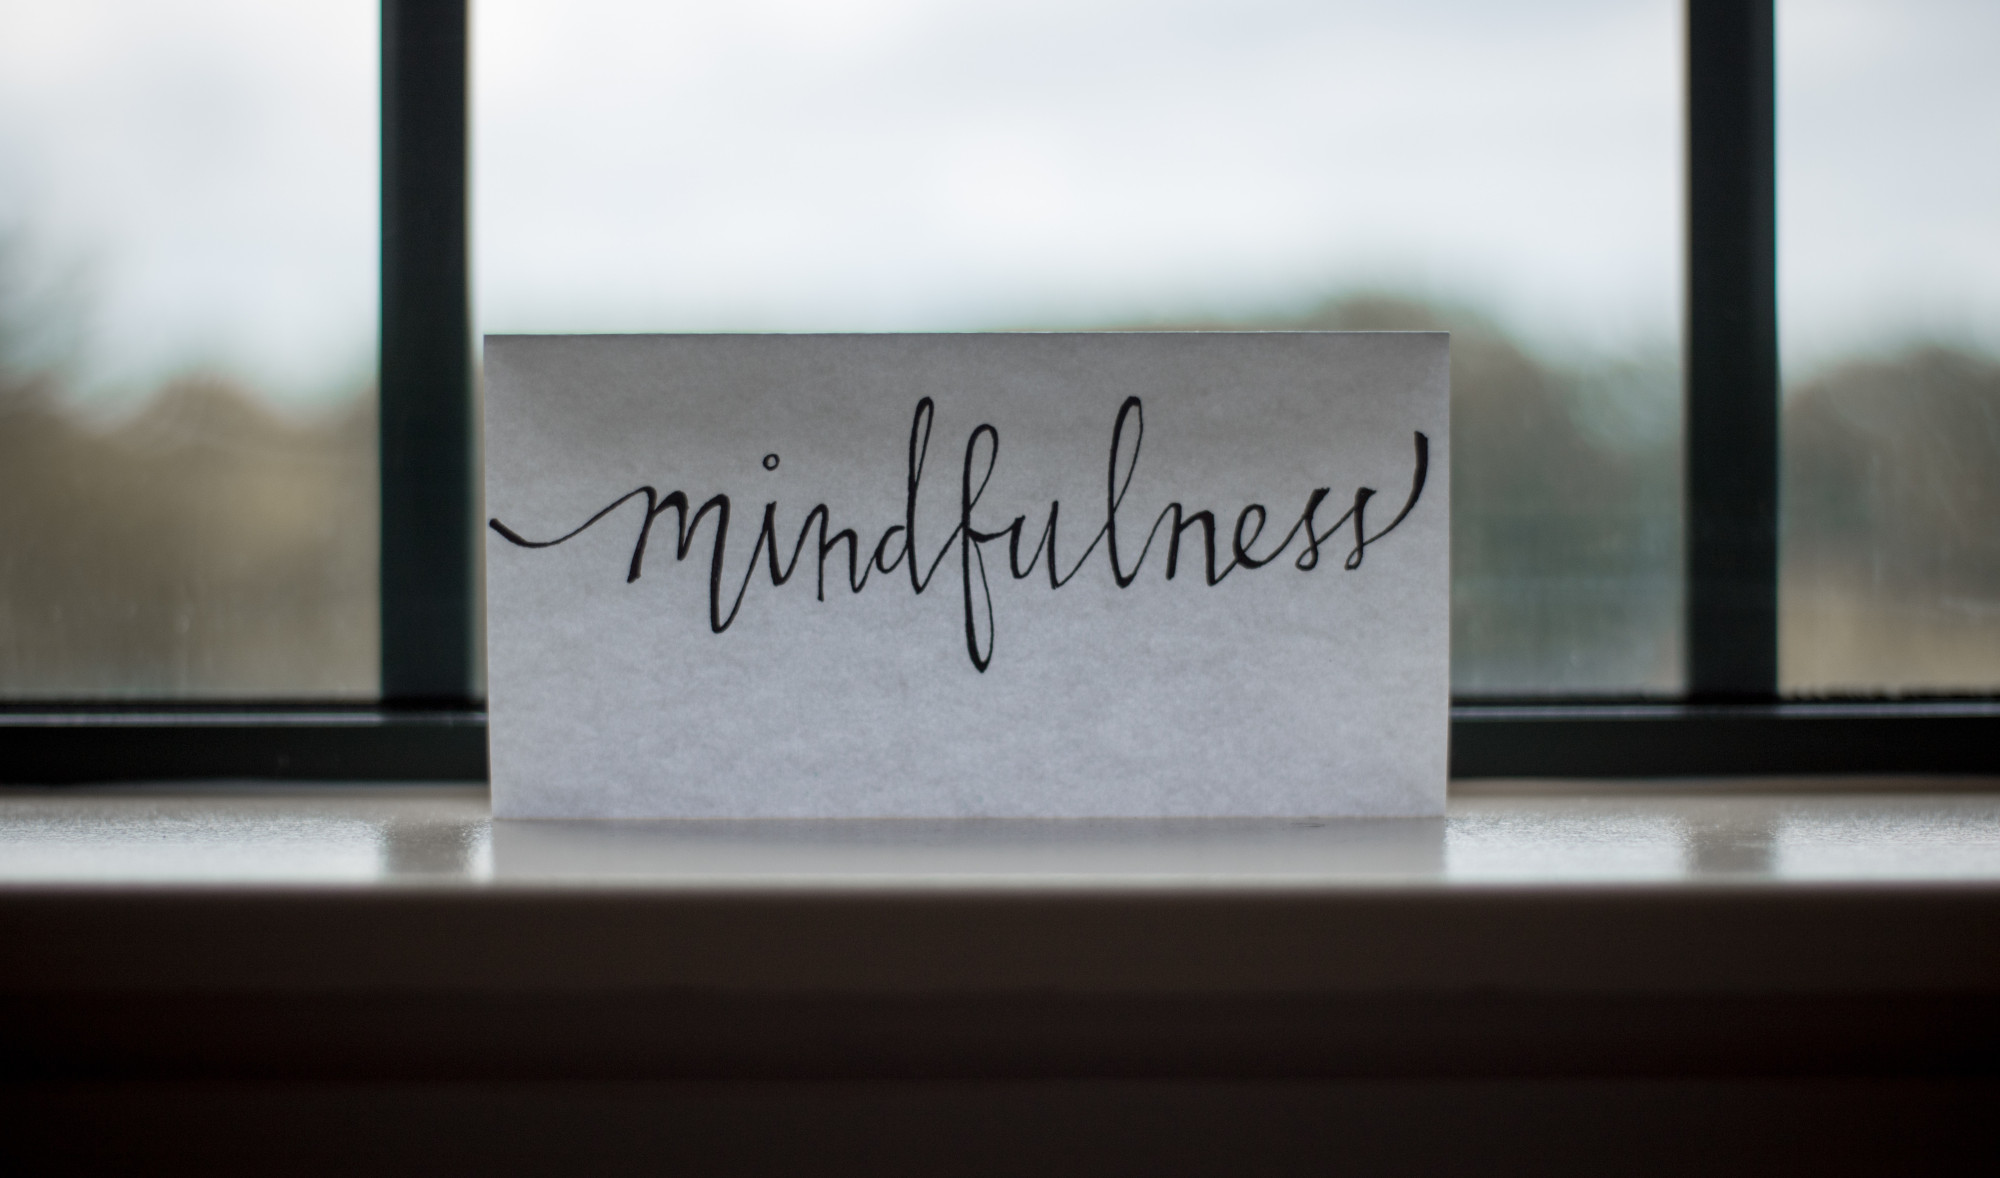 mindfulmedicine.co.uk image: Mindfulness written on a piece of paper